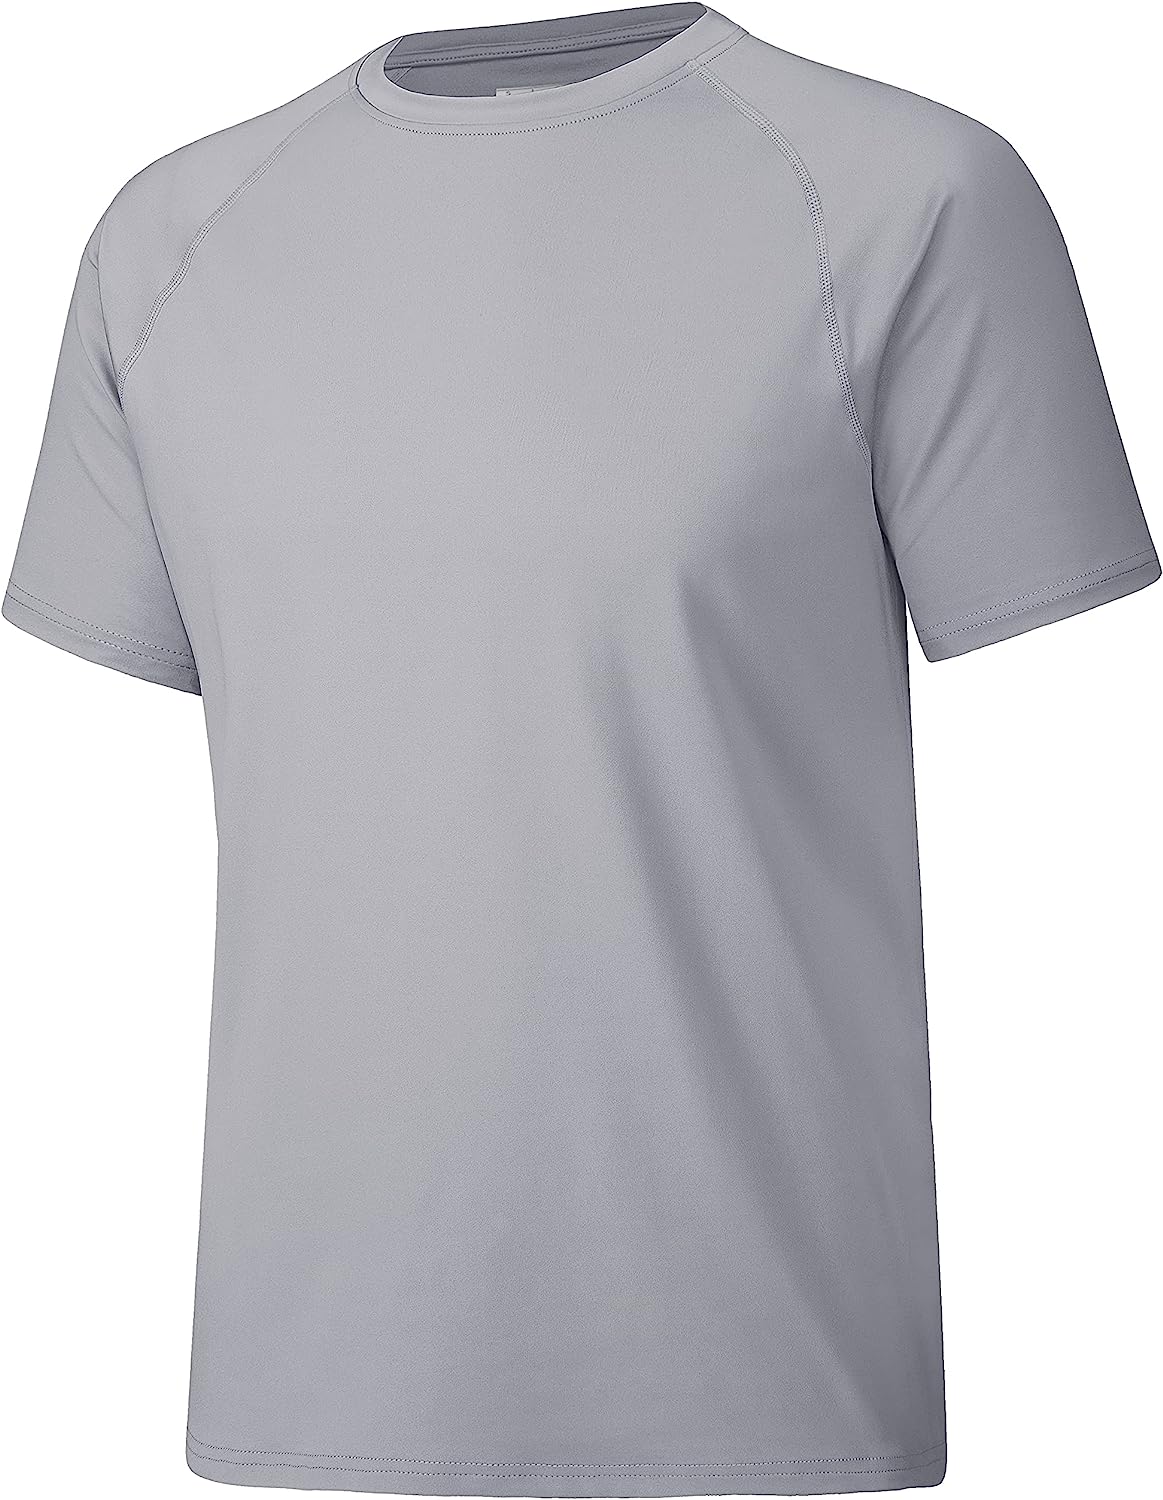 MAGCOMSEN Men's SPF Shirts Short Sleeve Shirts UPF 50+ Quick Dry Rashguard  Worko